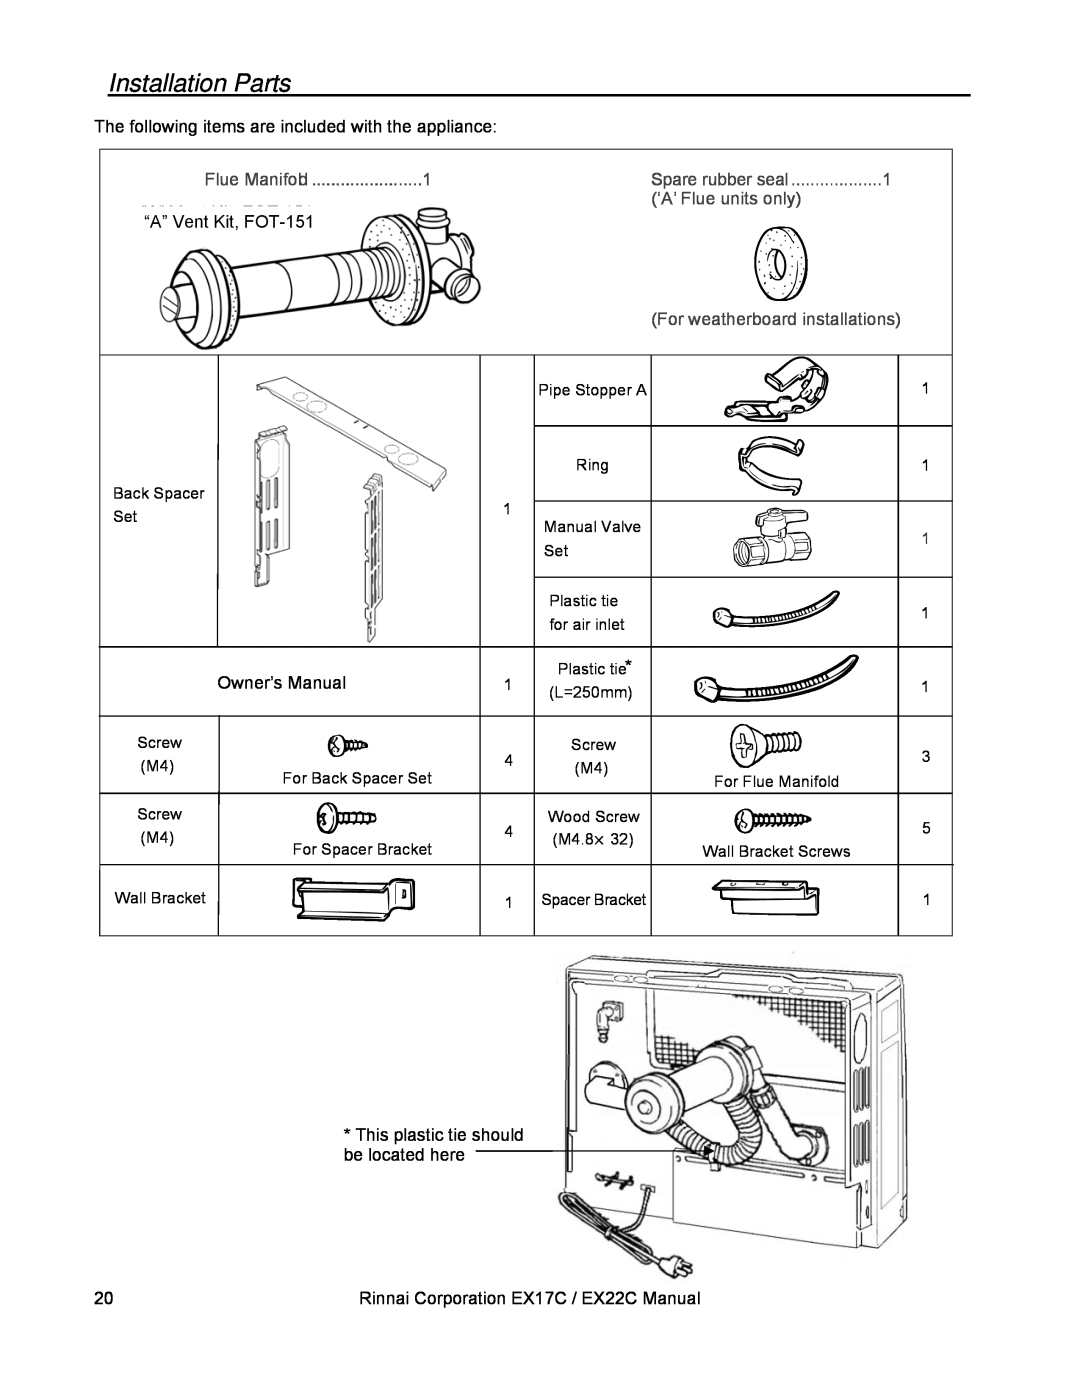 Rinnai EX17C, EX22C Installation Parts, Flue Manifold1Spare rubber seal, “A” Vent Kit, FOT-151, ‘A’ Flue units only 